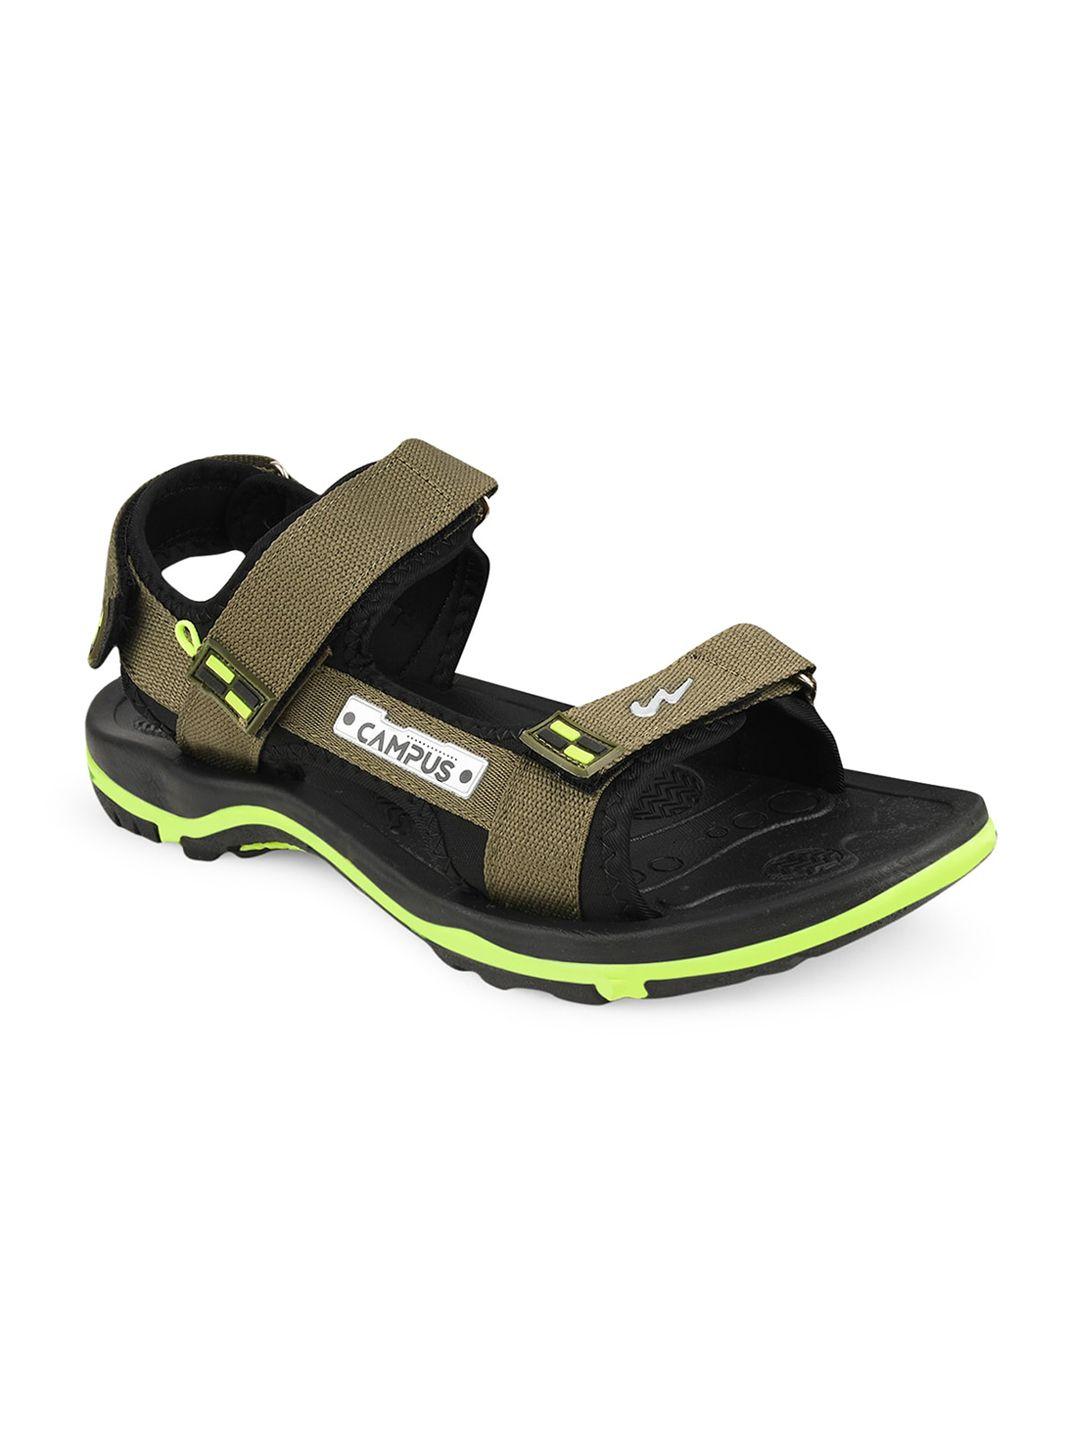 campus-men-green-&-black-patterned-sports-sandals